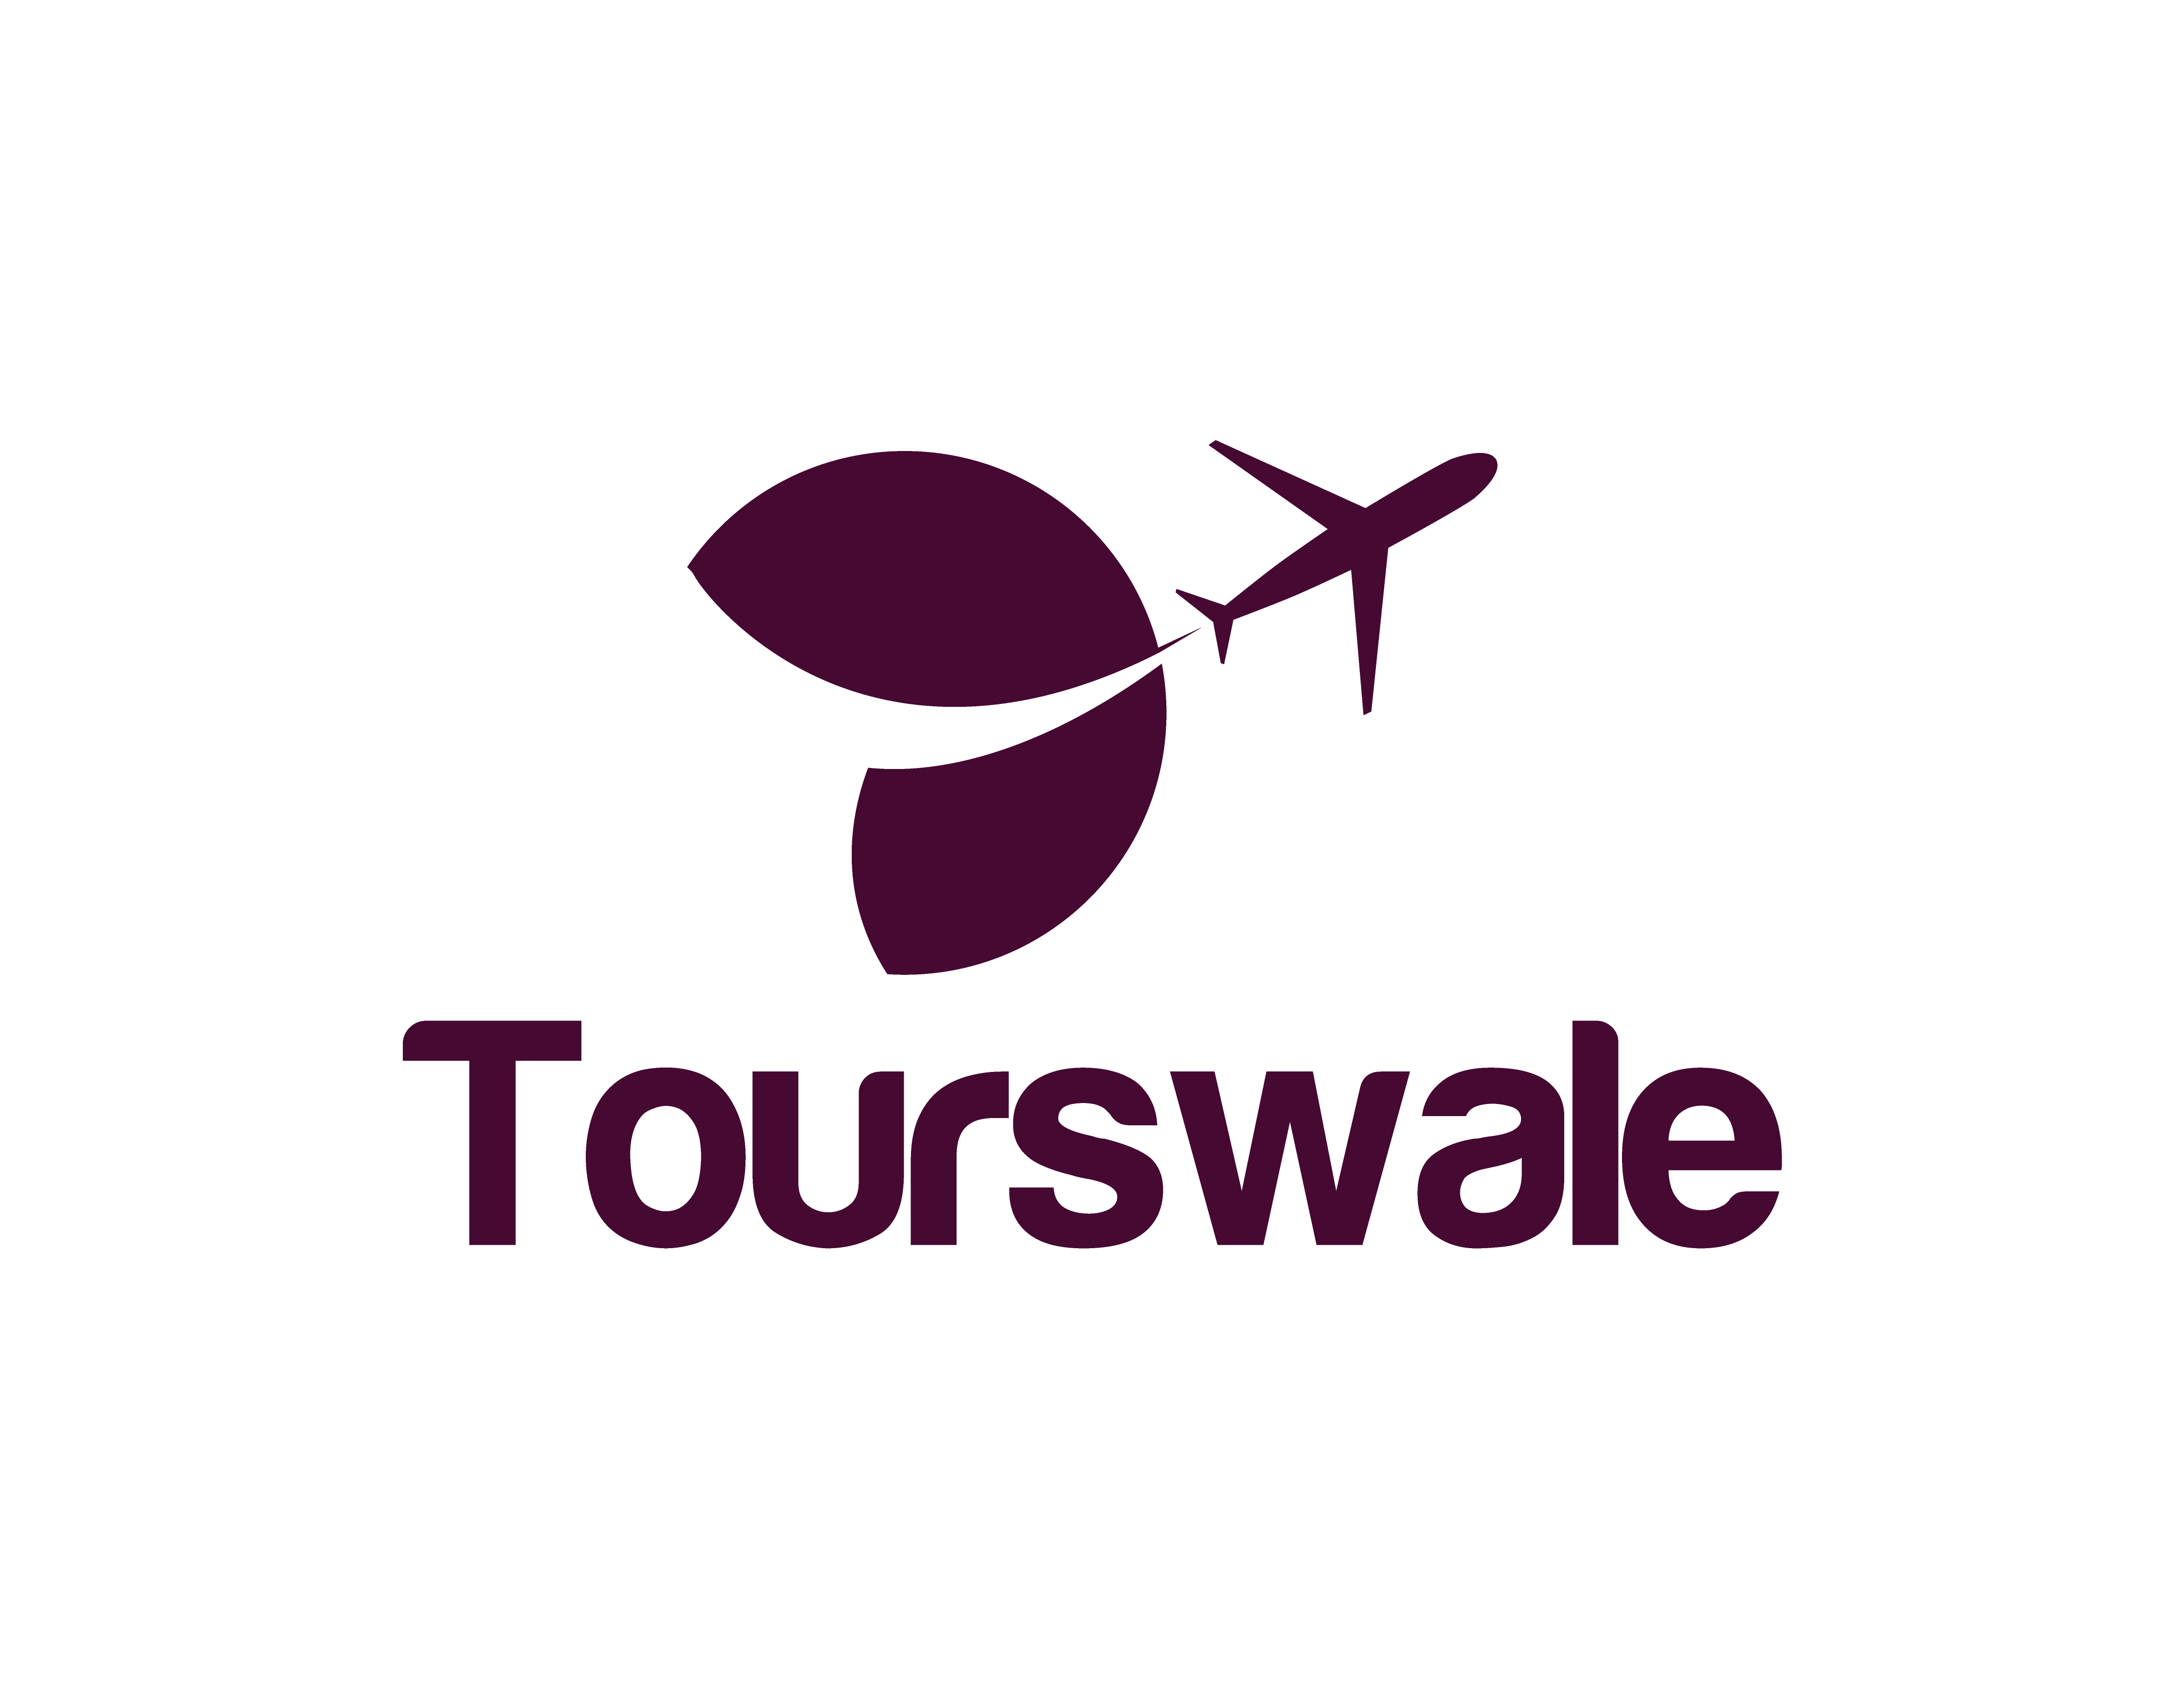 Tourswale